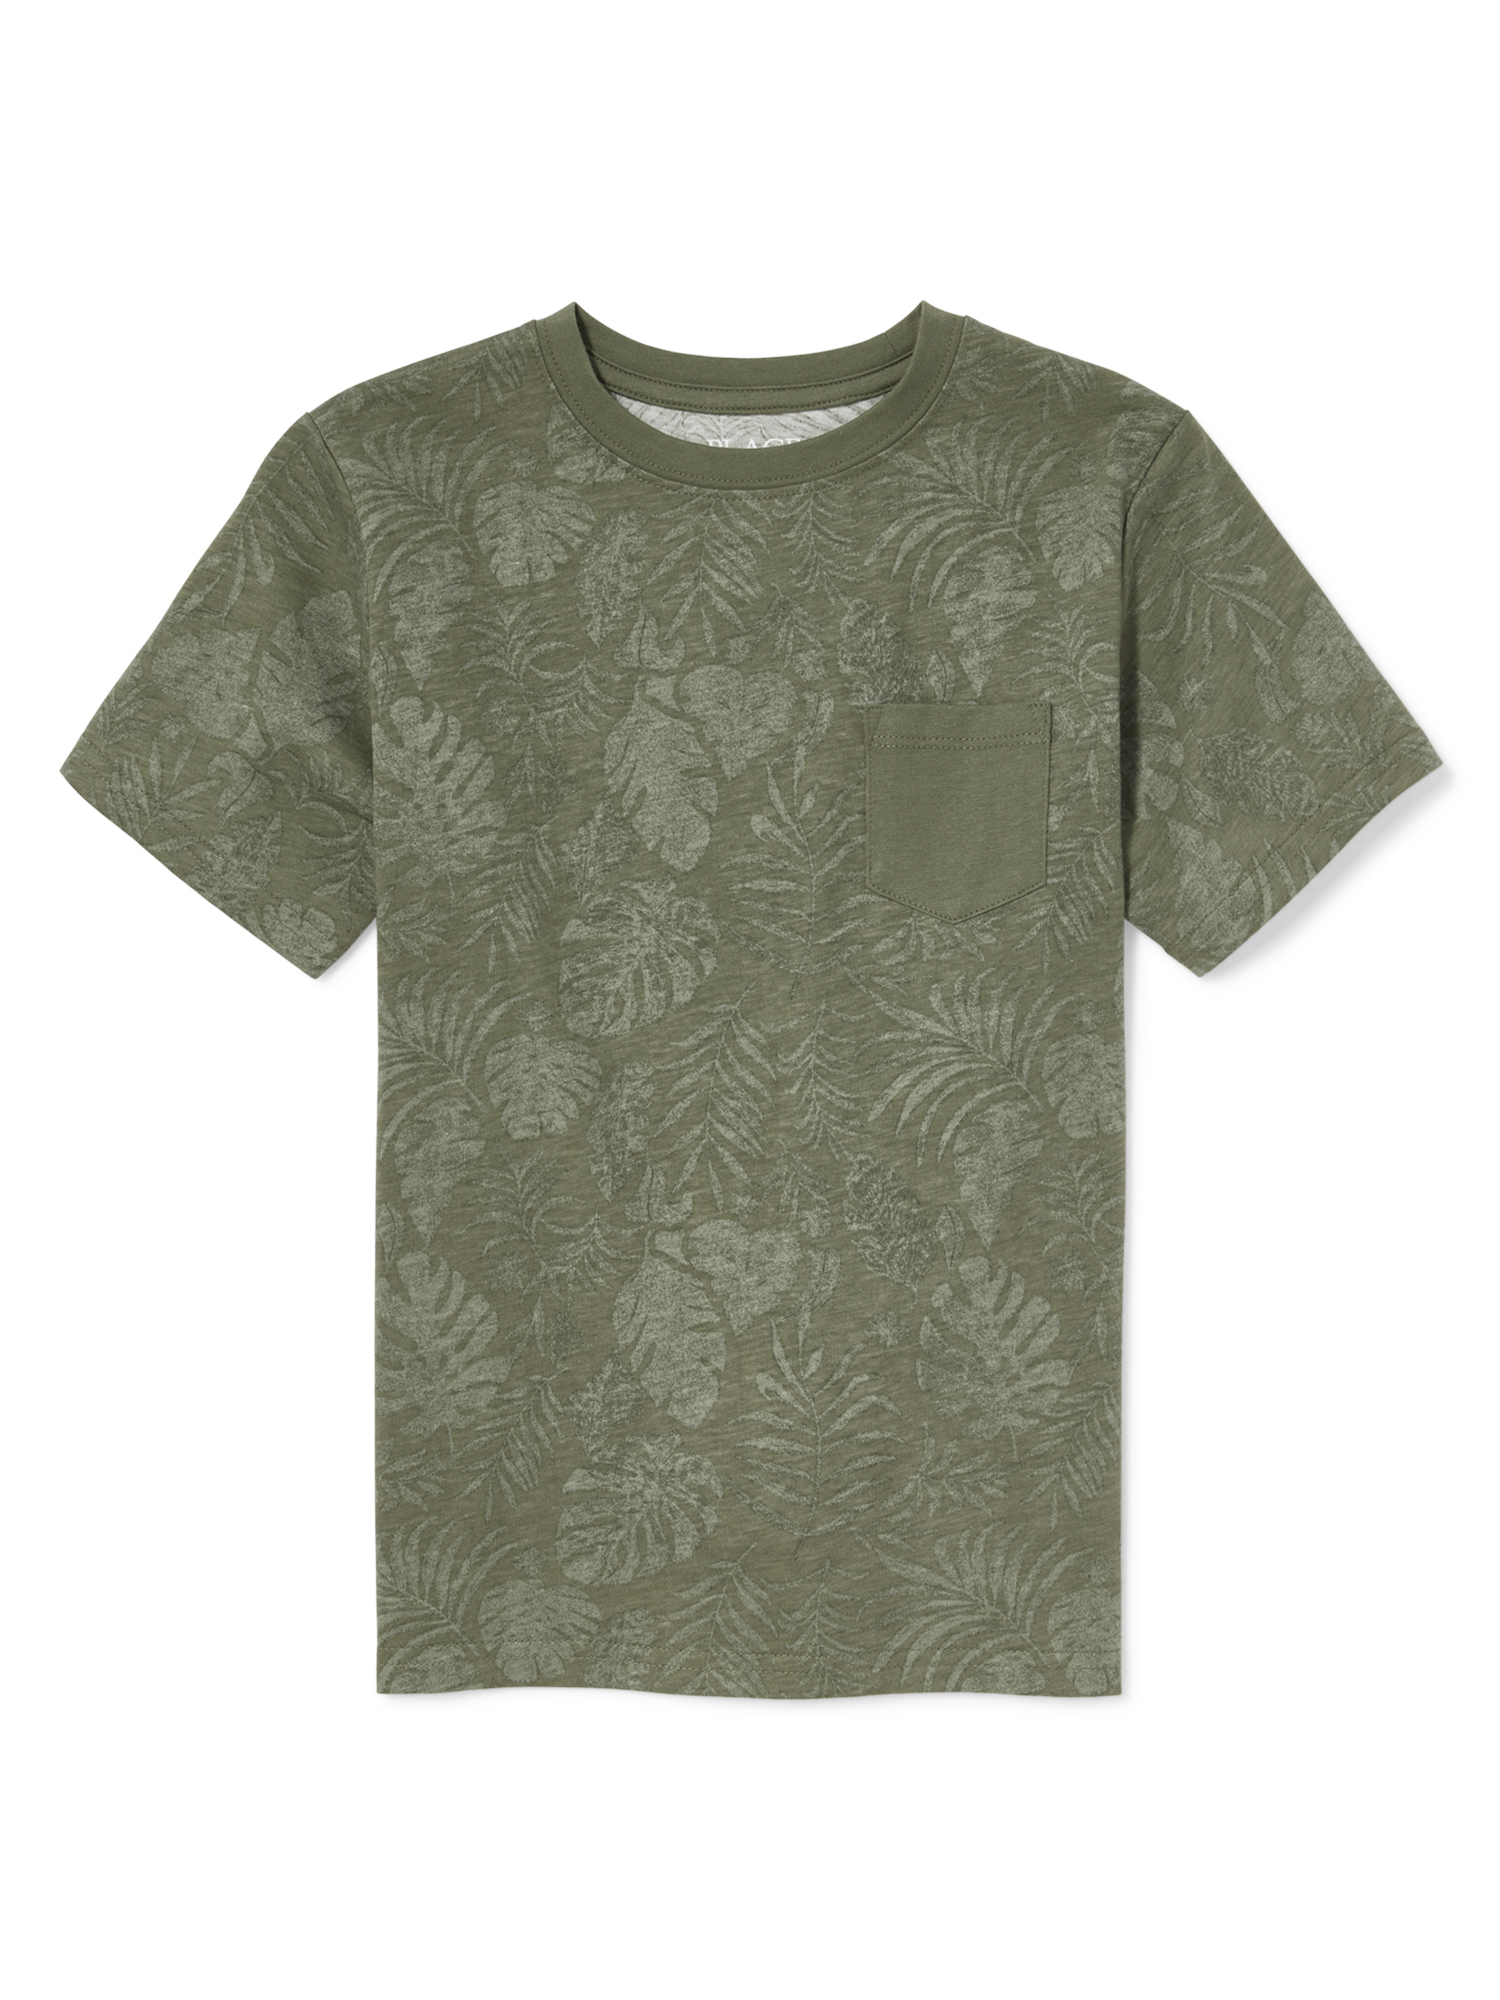 The Children's Place Short Sleeve Leaf Print Pocket T-Shirt (Big Boys) - image 1 of 1